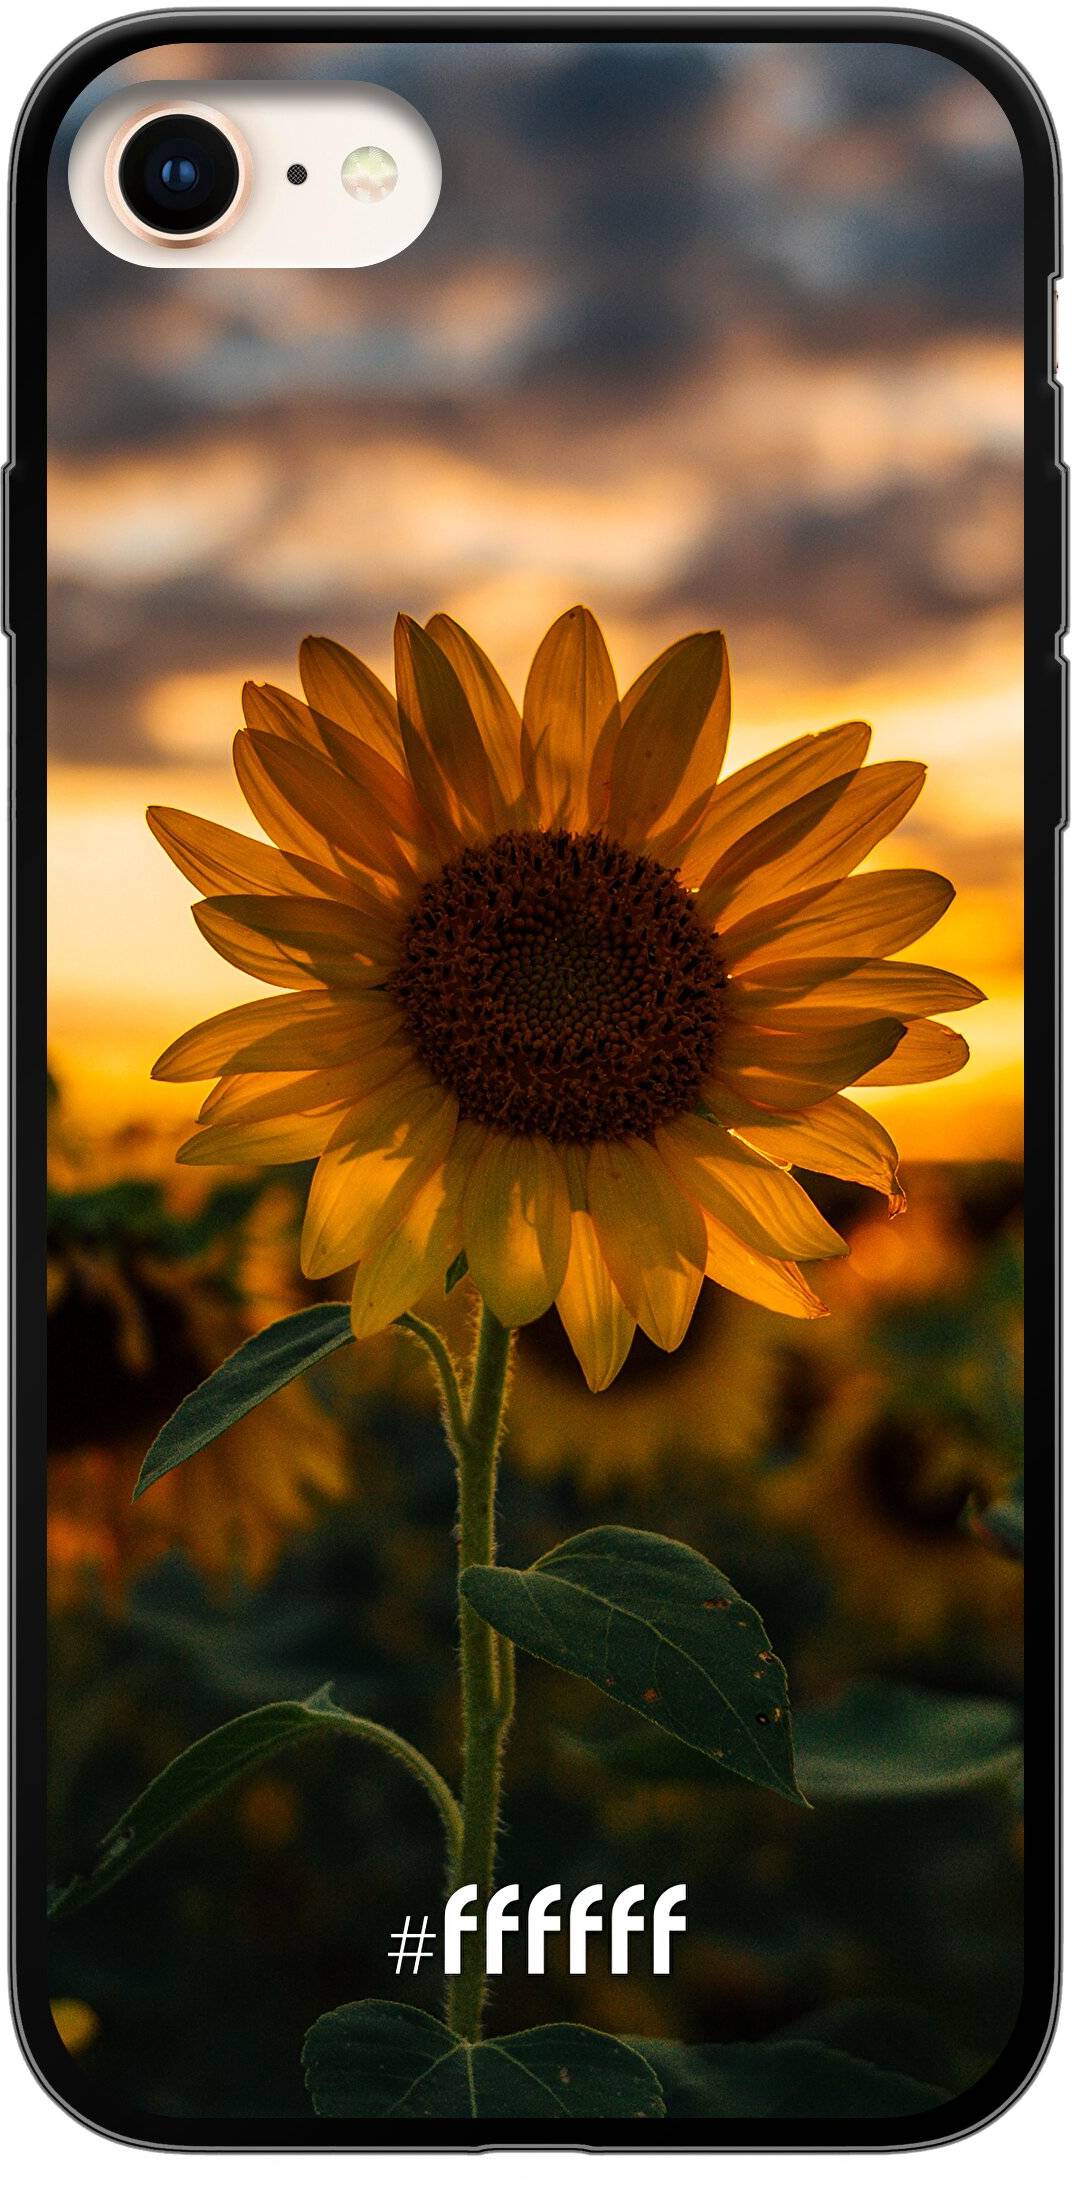 Sunset Sunflower iPhone 7